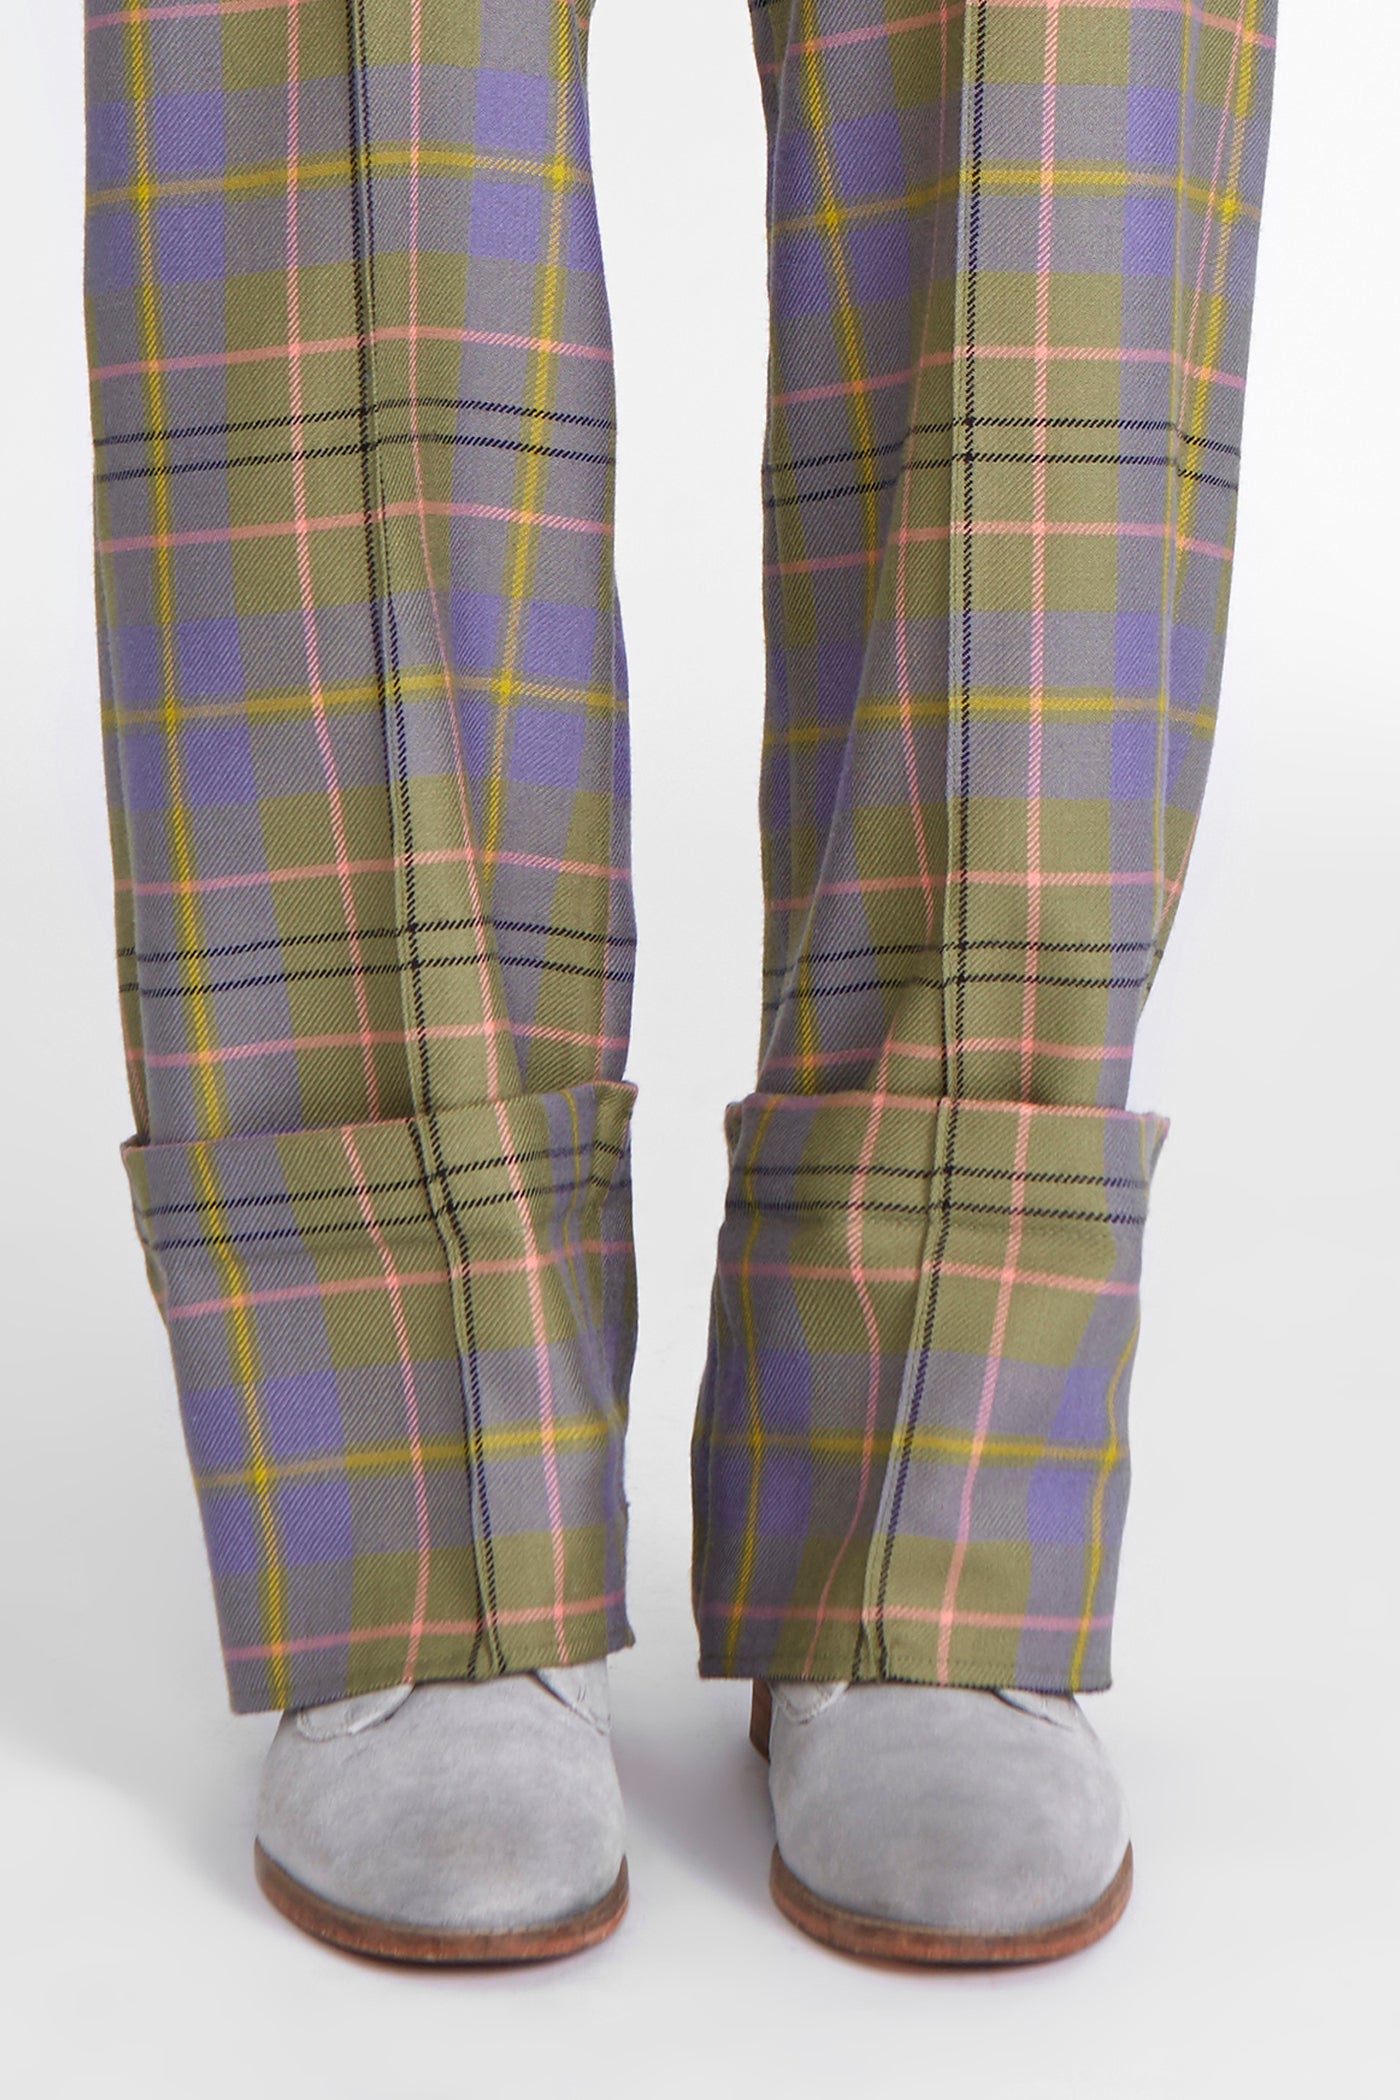 Tailored Trouser in lilac & green Scottish tartan 100% wool